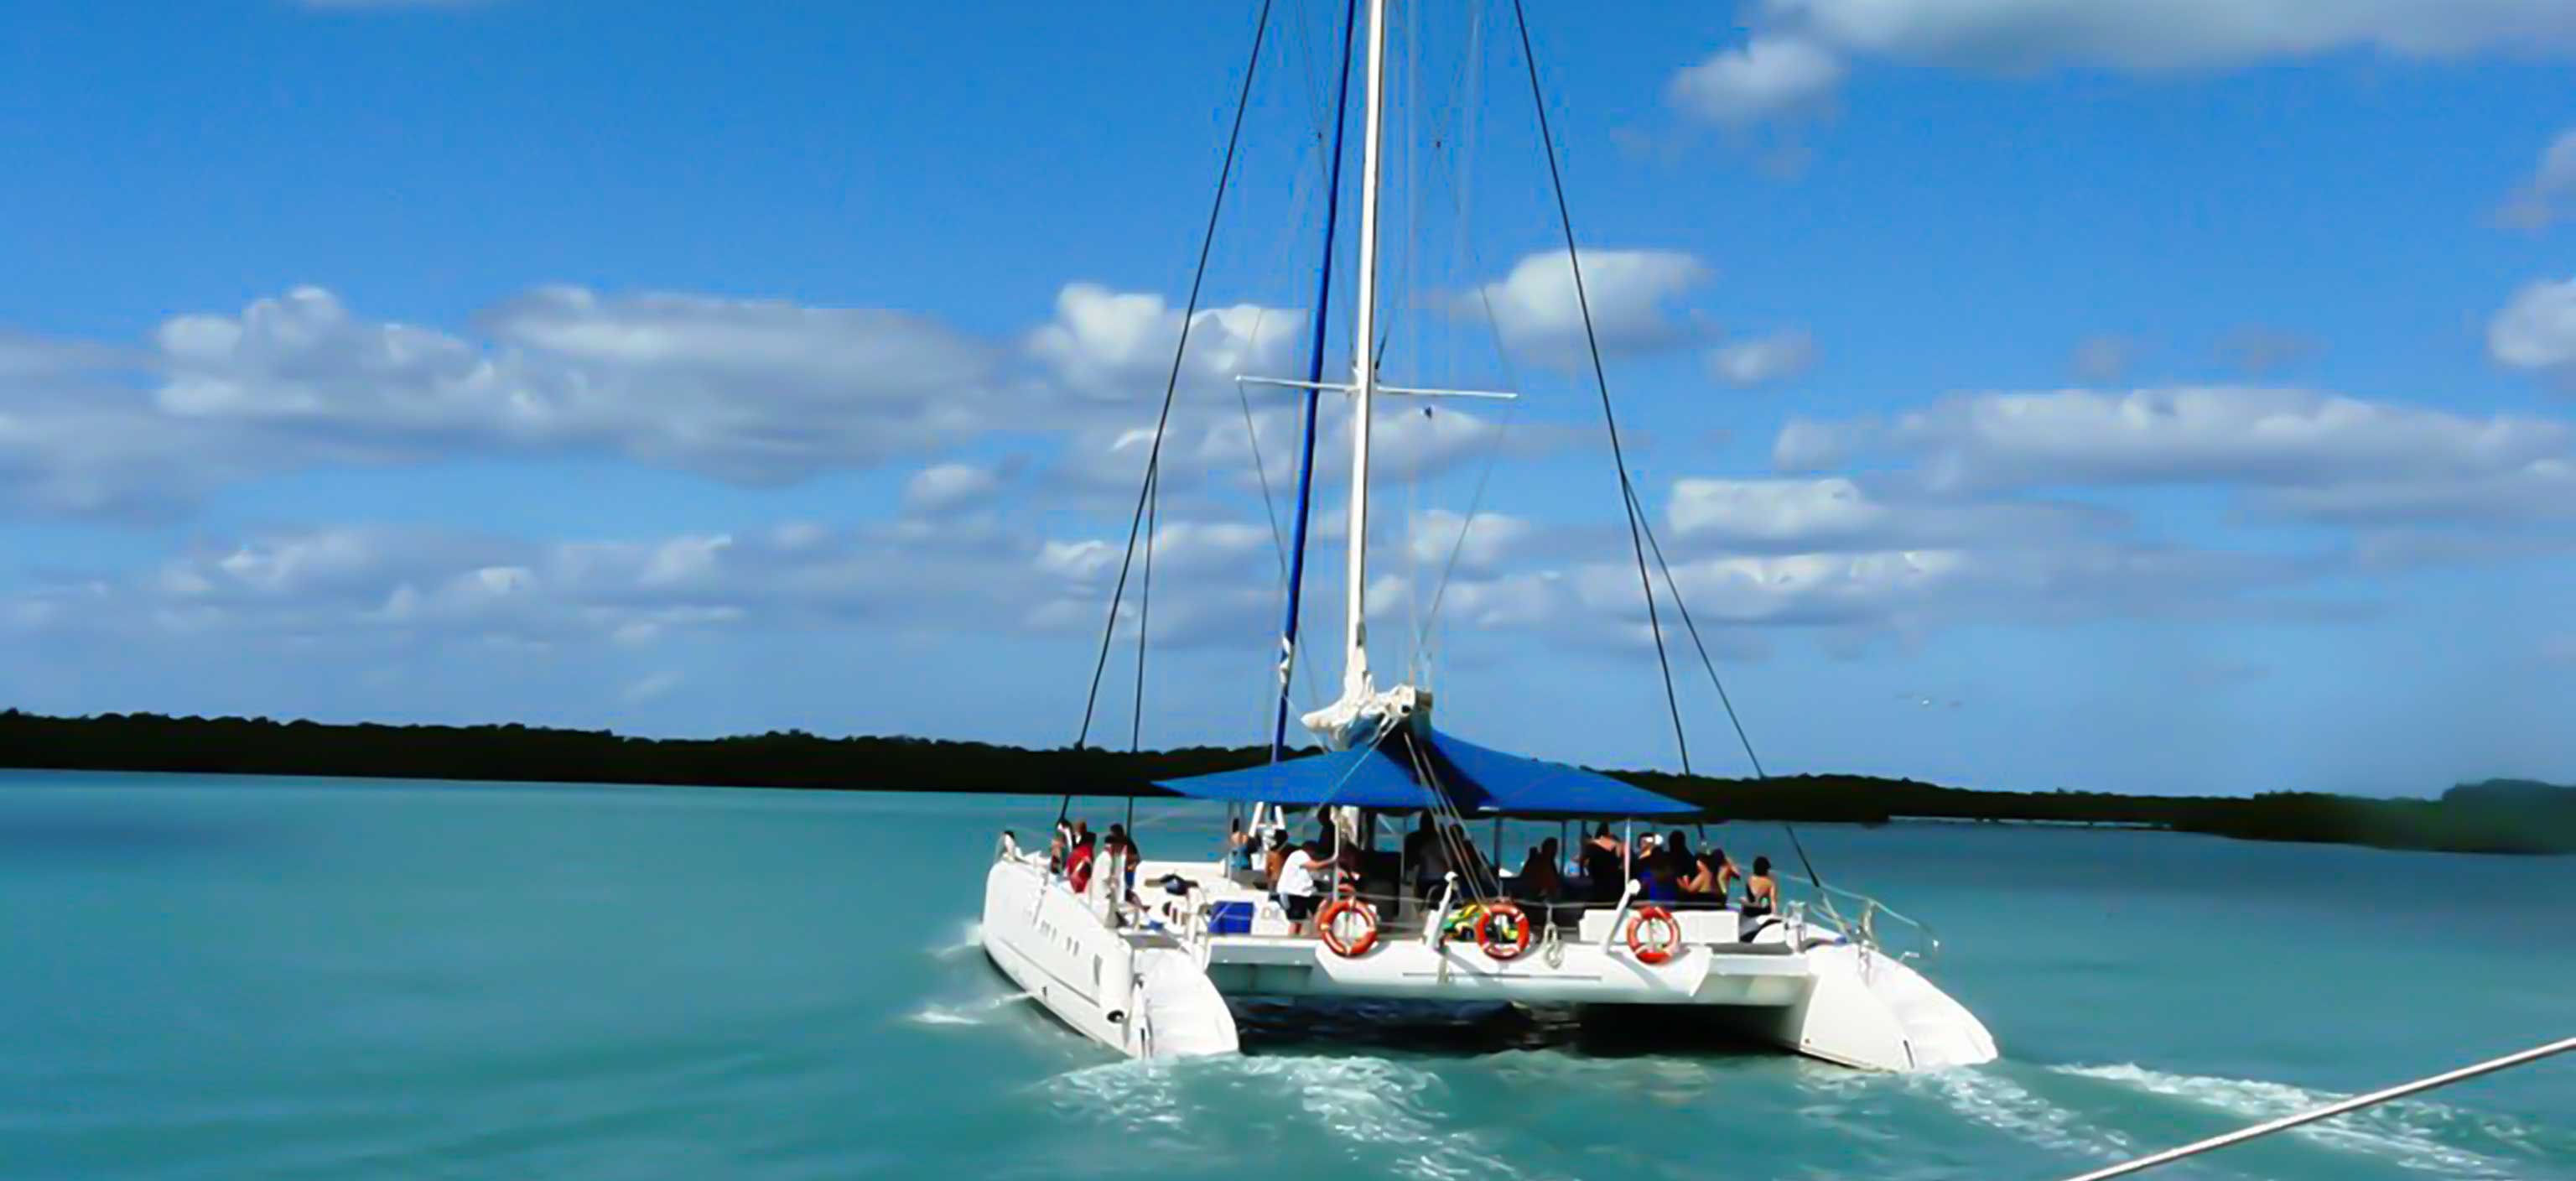 day5-Varadero-Cayo-Blanco-&-Catamaran-img1